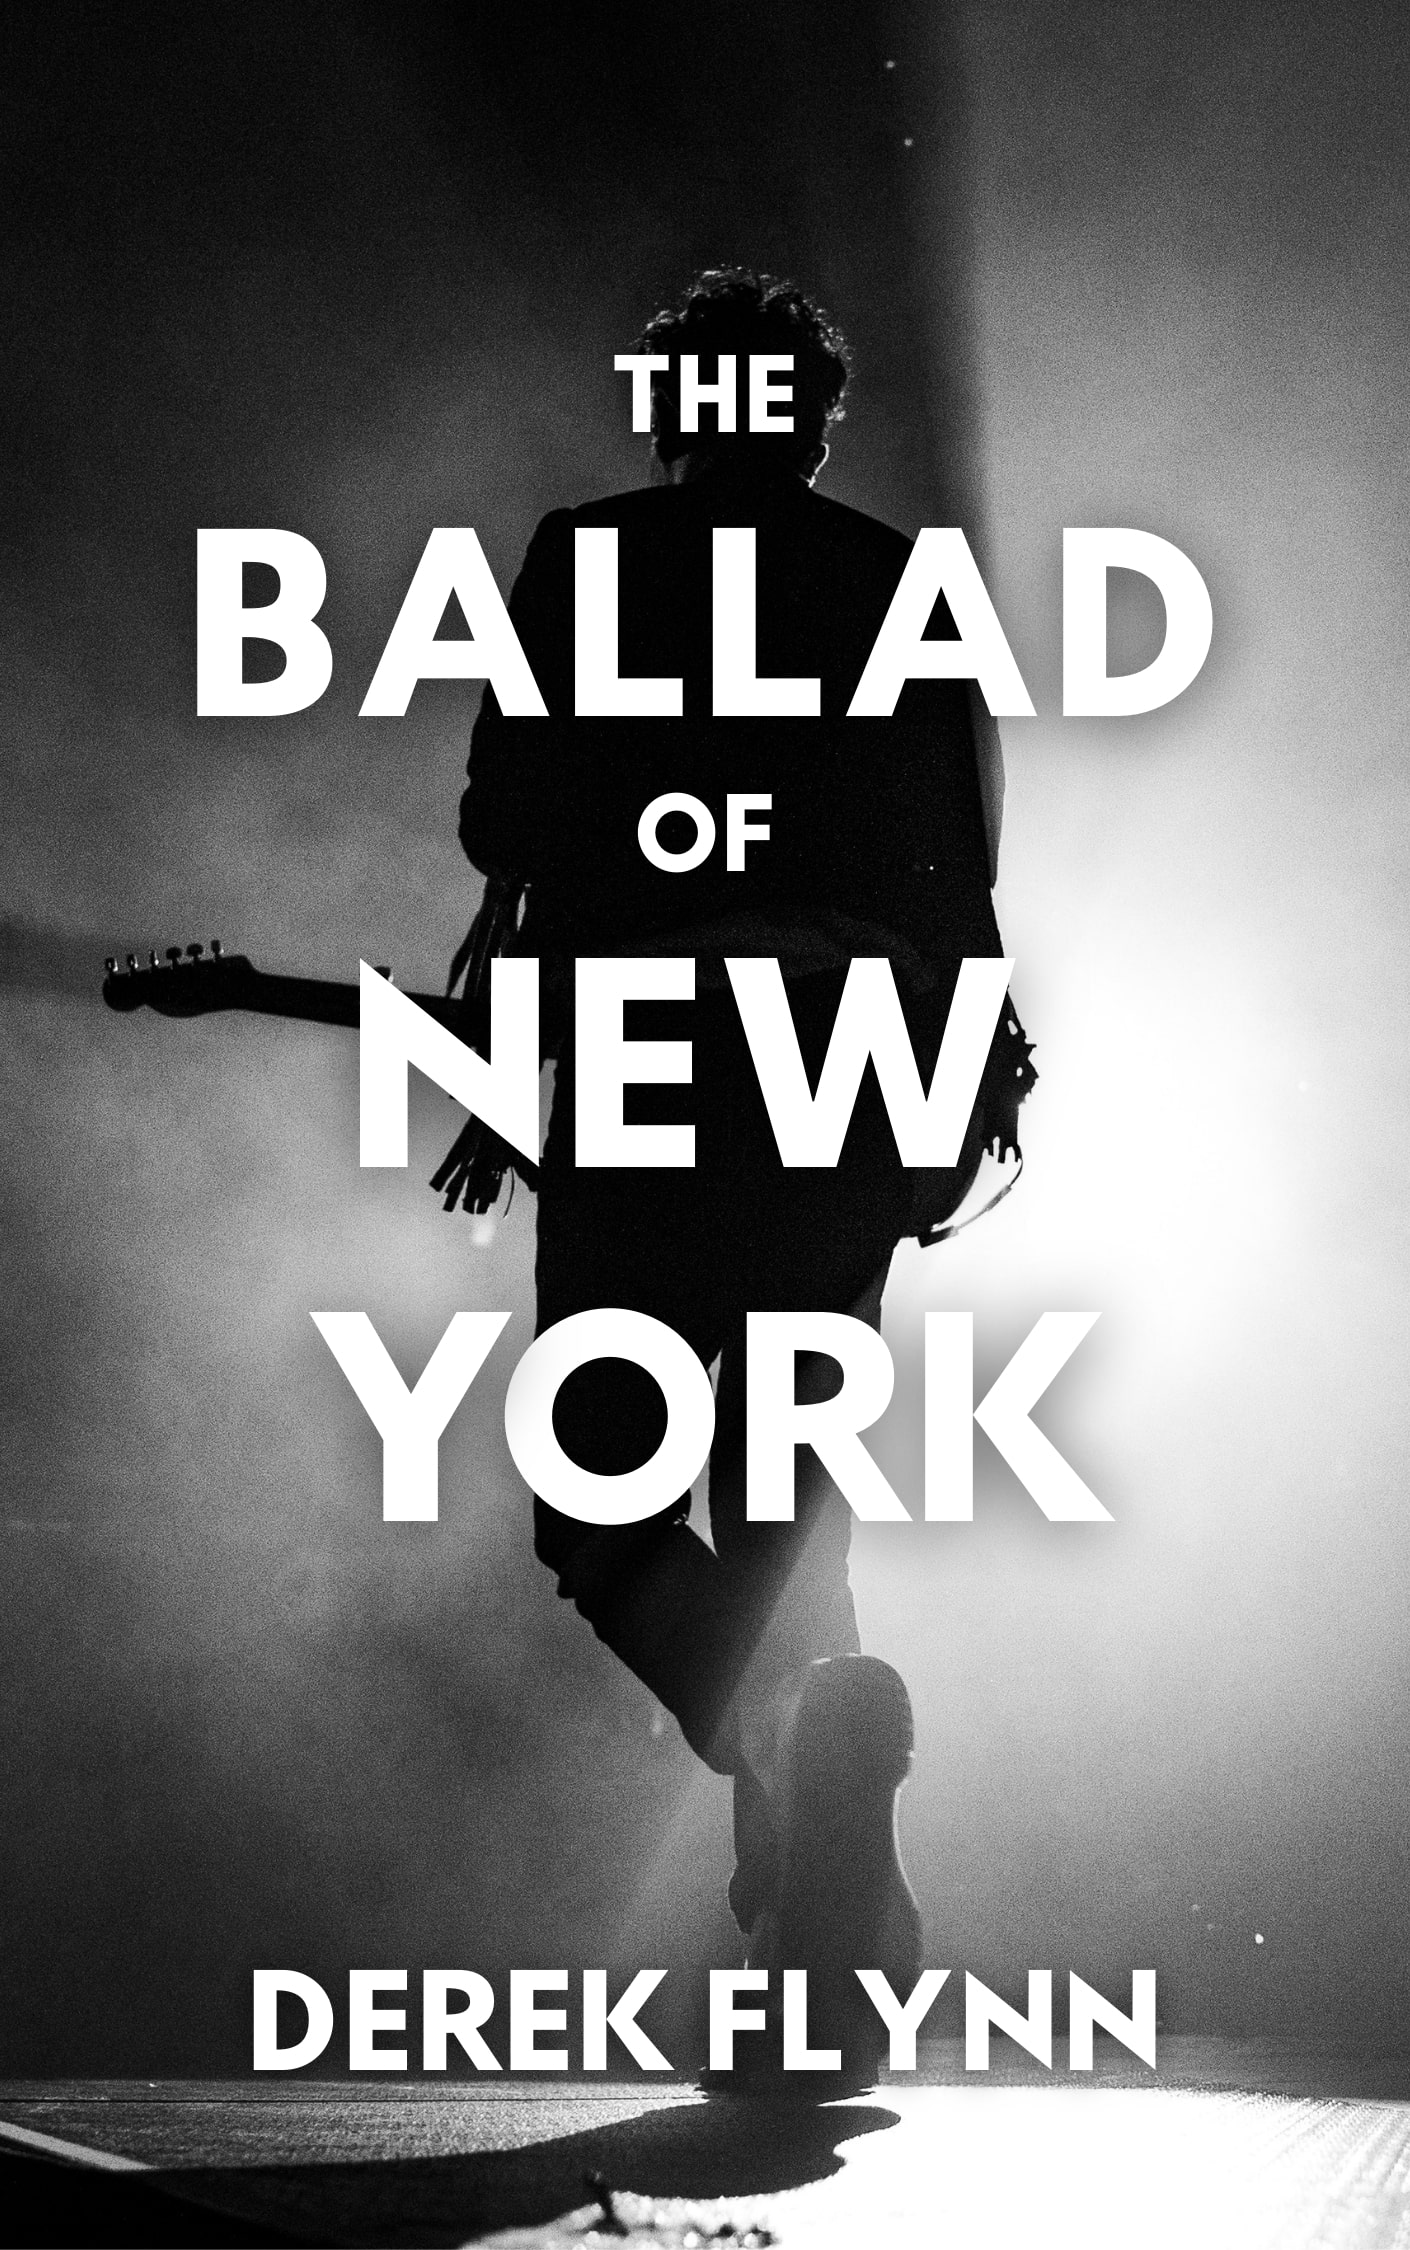 The Ballad of New York by Derek Flynn